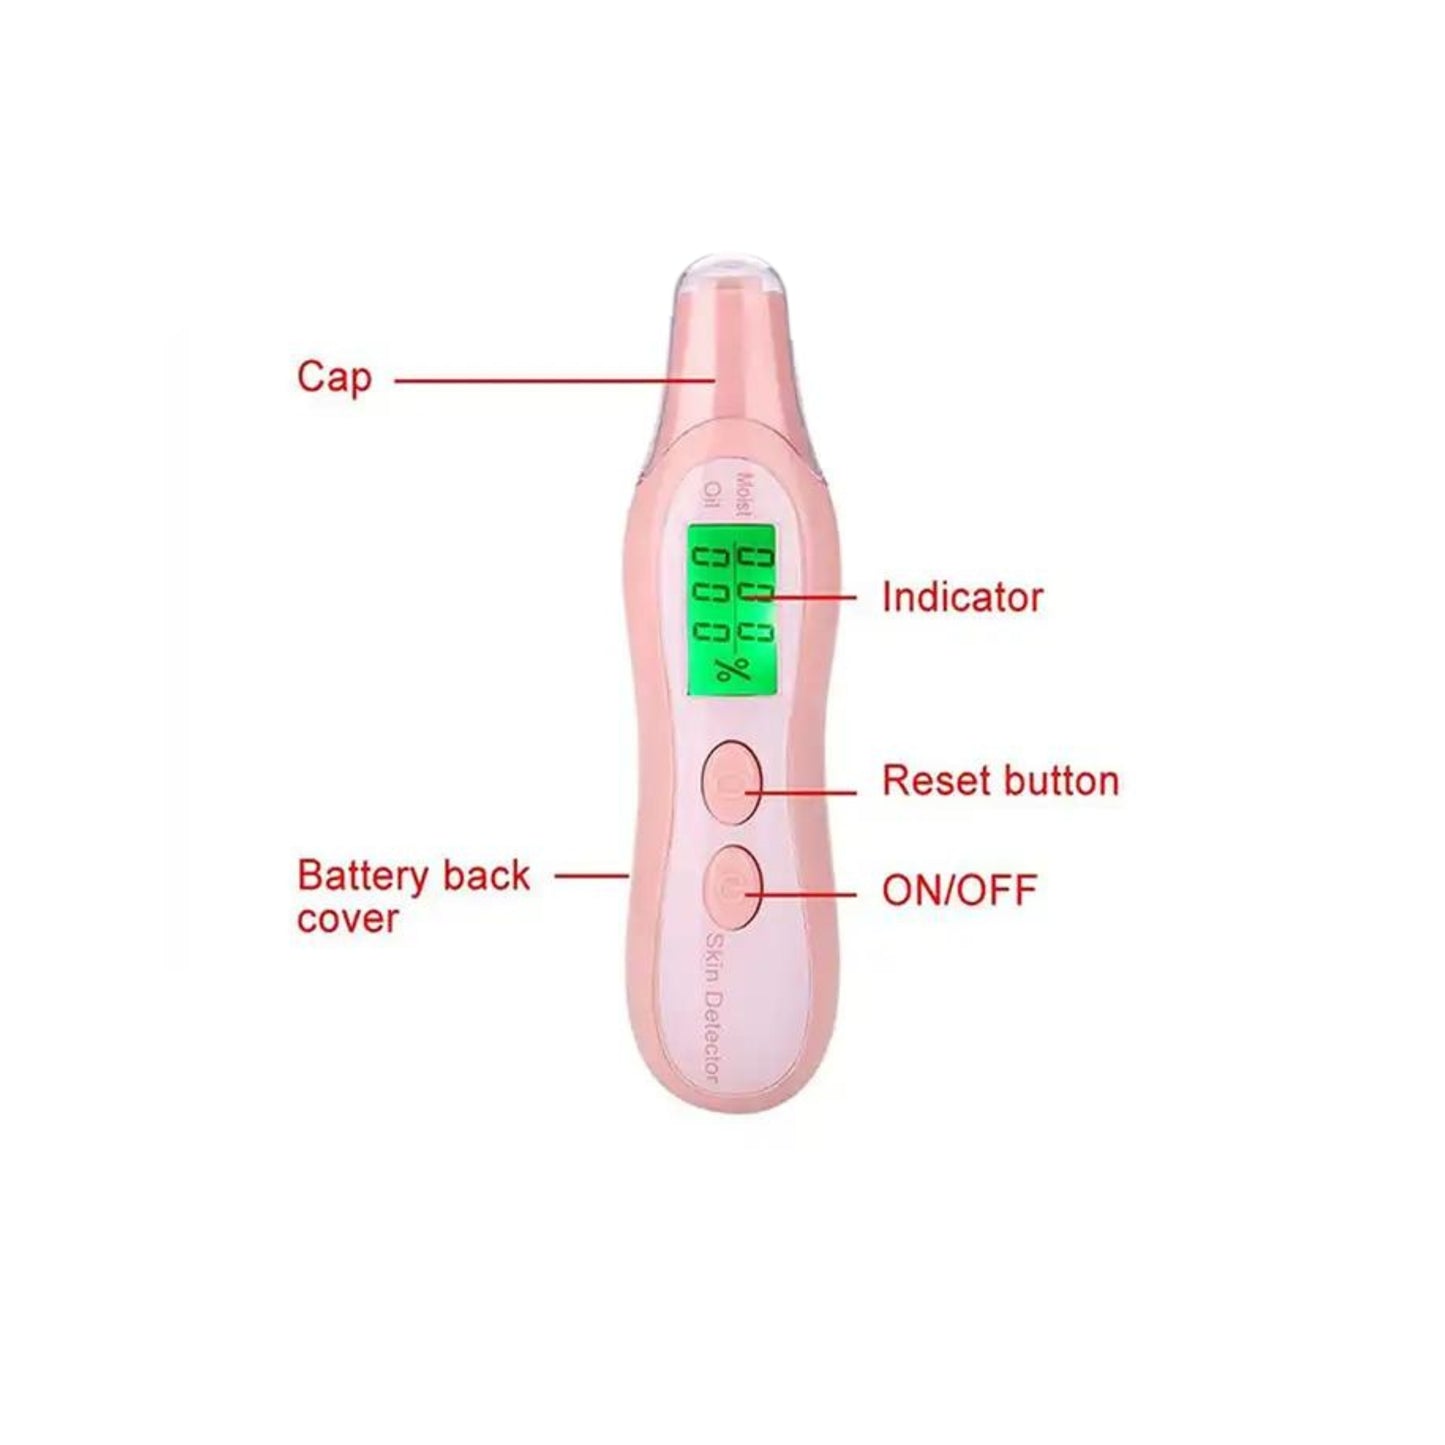 LCD Digital Skin Analyzer, Moisture Water Oil Monitor for Skin Care, High Sensitive Facial Skin Tester USB Digital Measuring Device